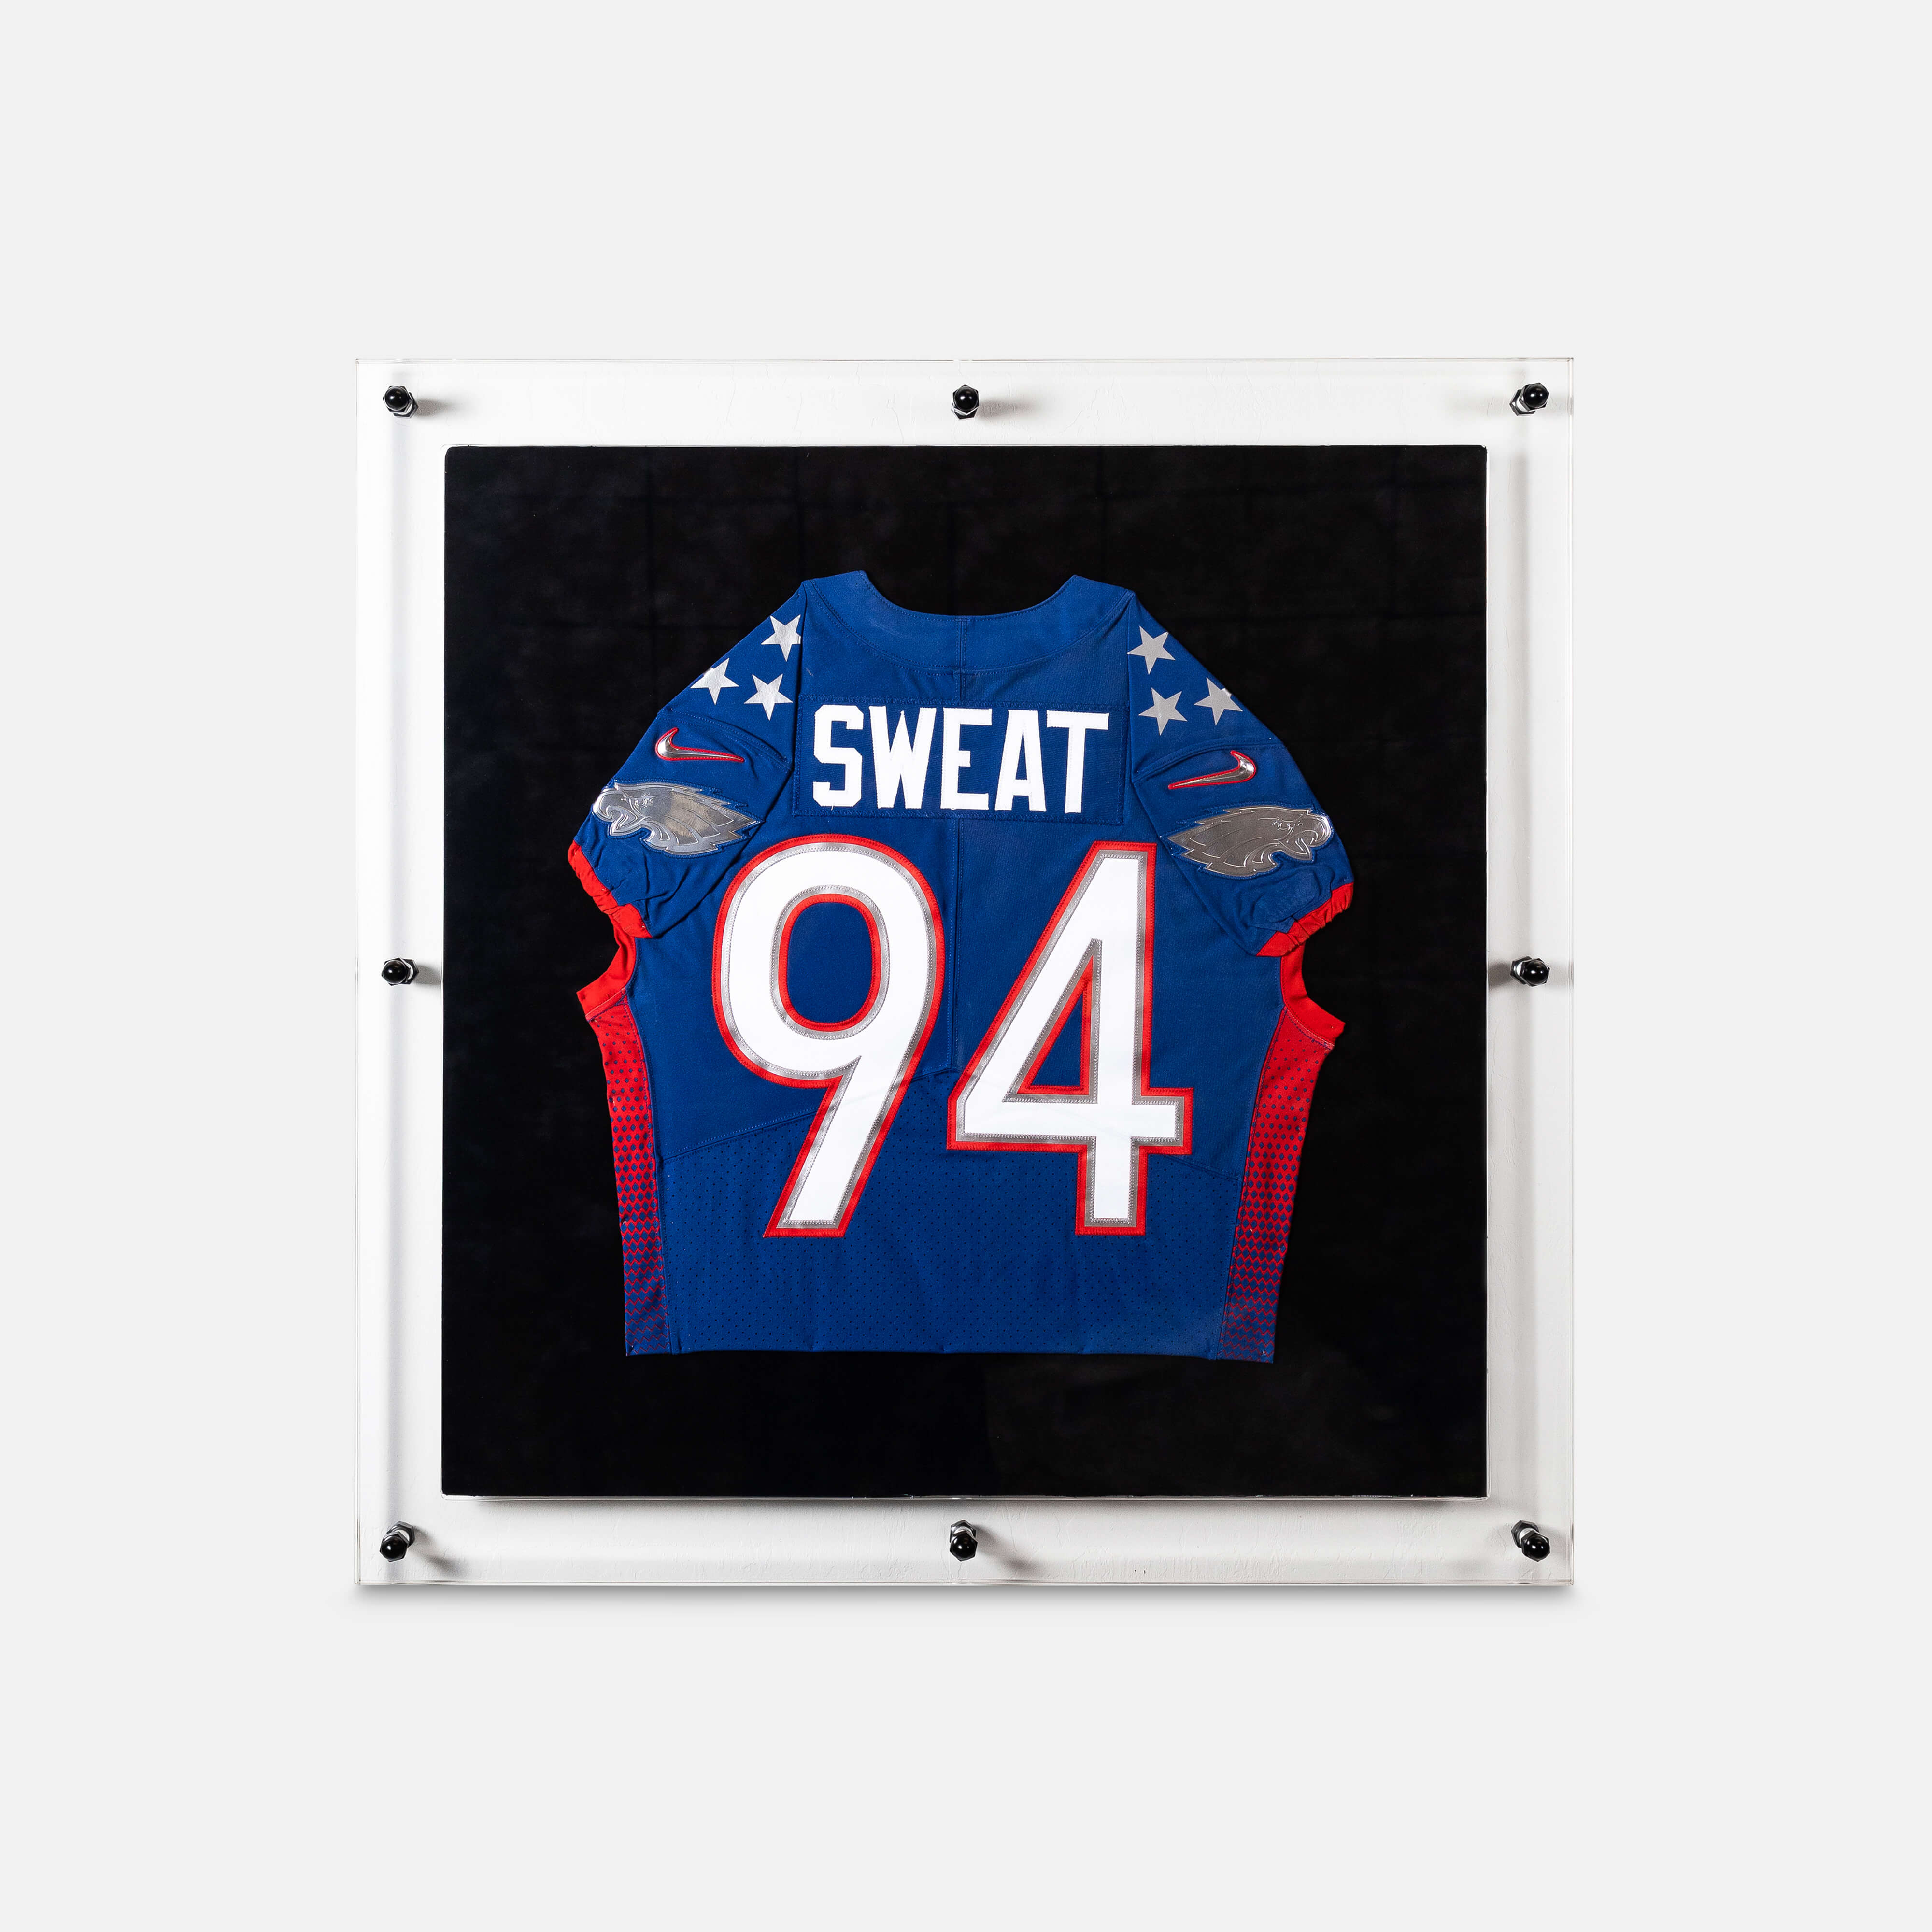 Acrylic Jersey Display - Looksee Designs - Josh Sweat Jersey - NFL Jersey Frame